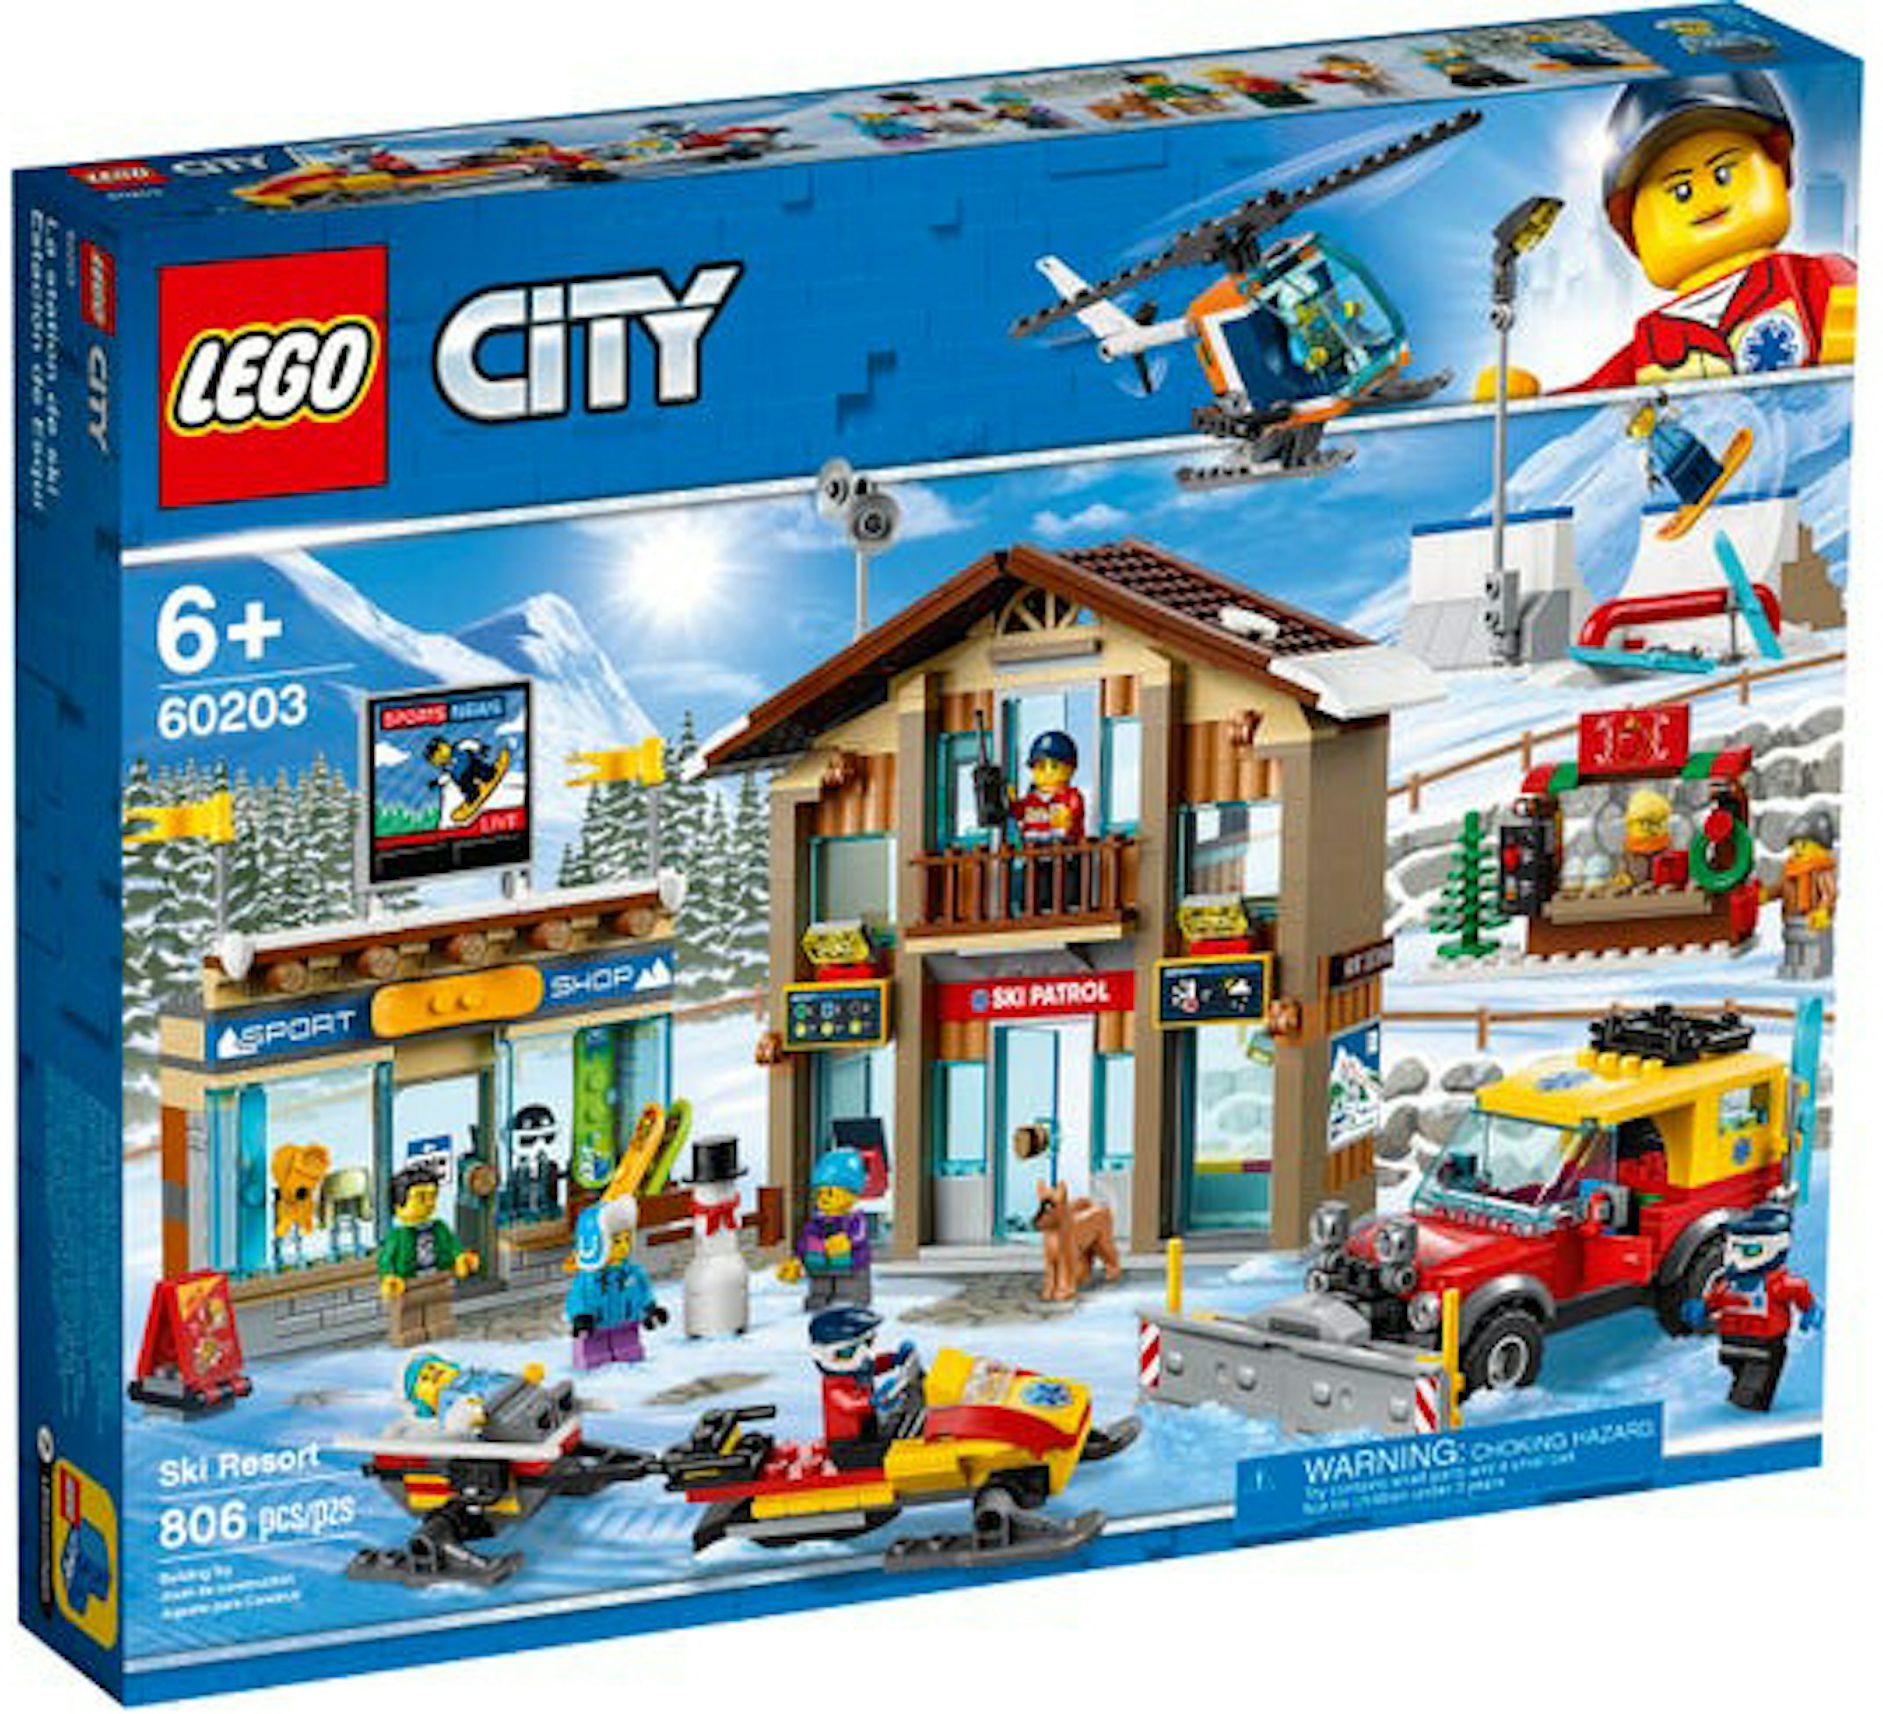 Lego City Ski Resort Construction Kit (60203) Building Kit 806 Pcs Retired  Set